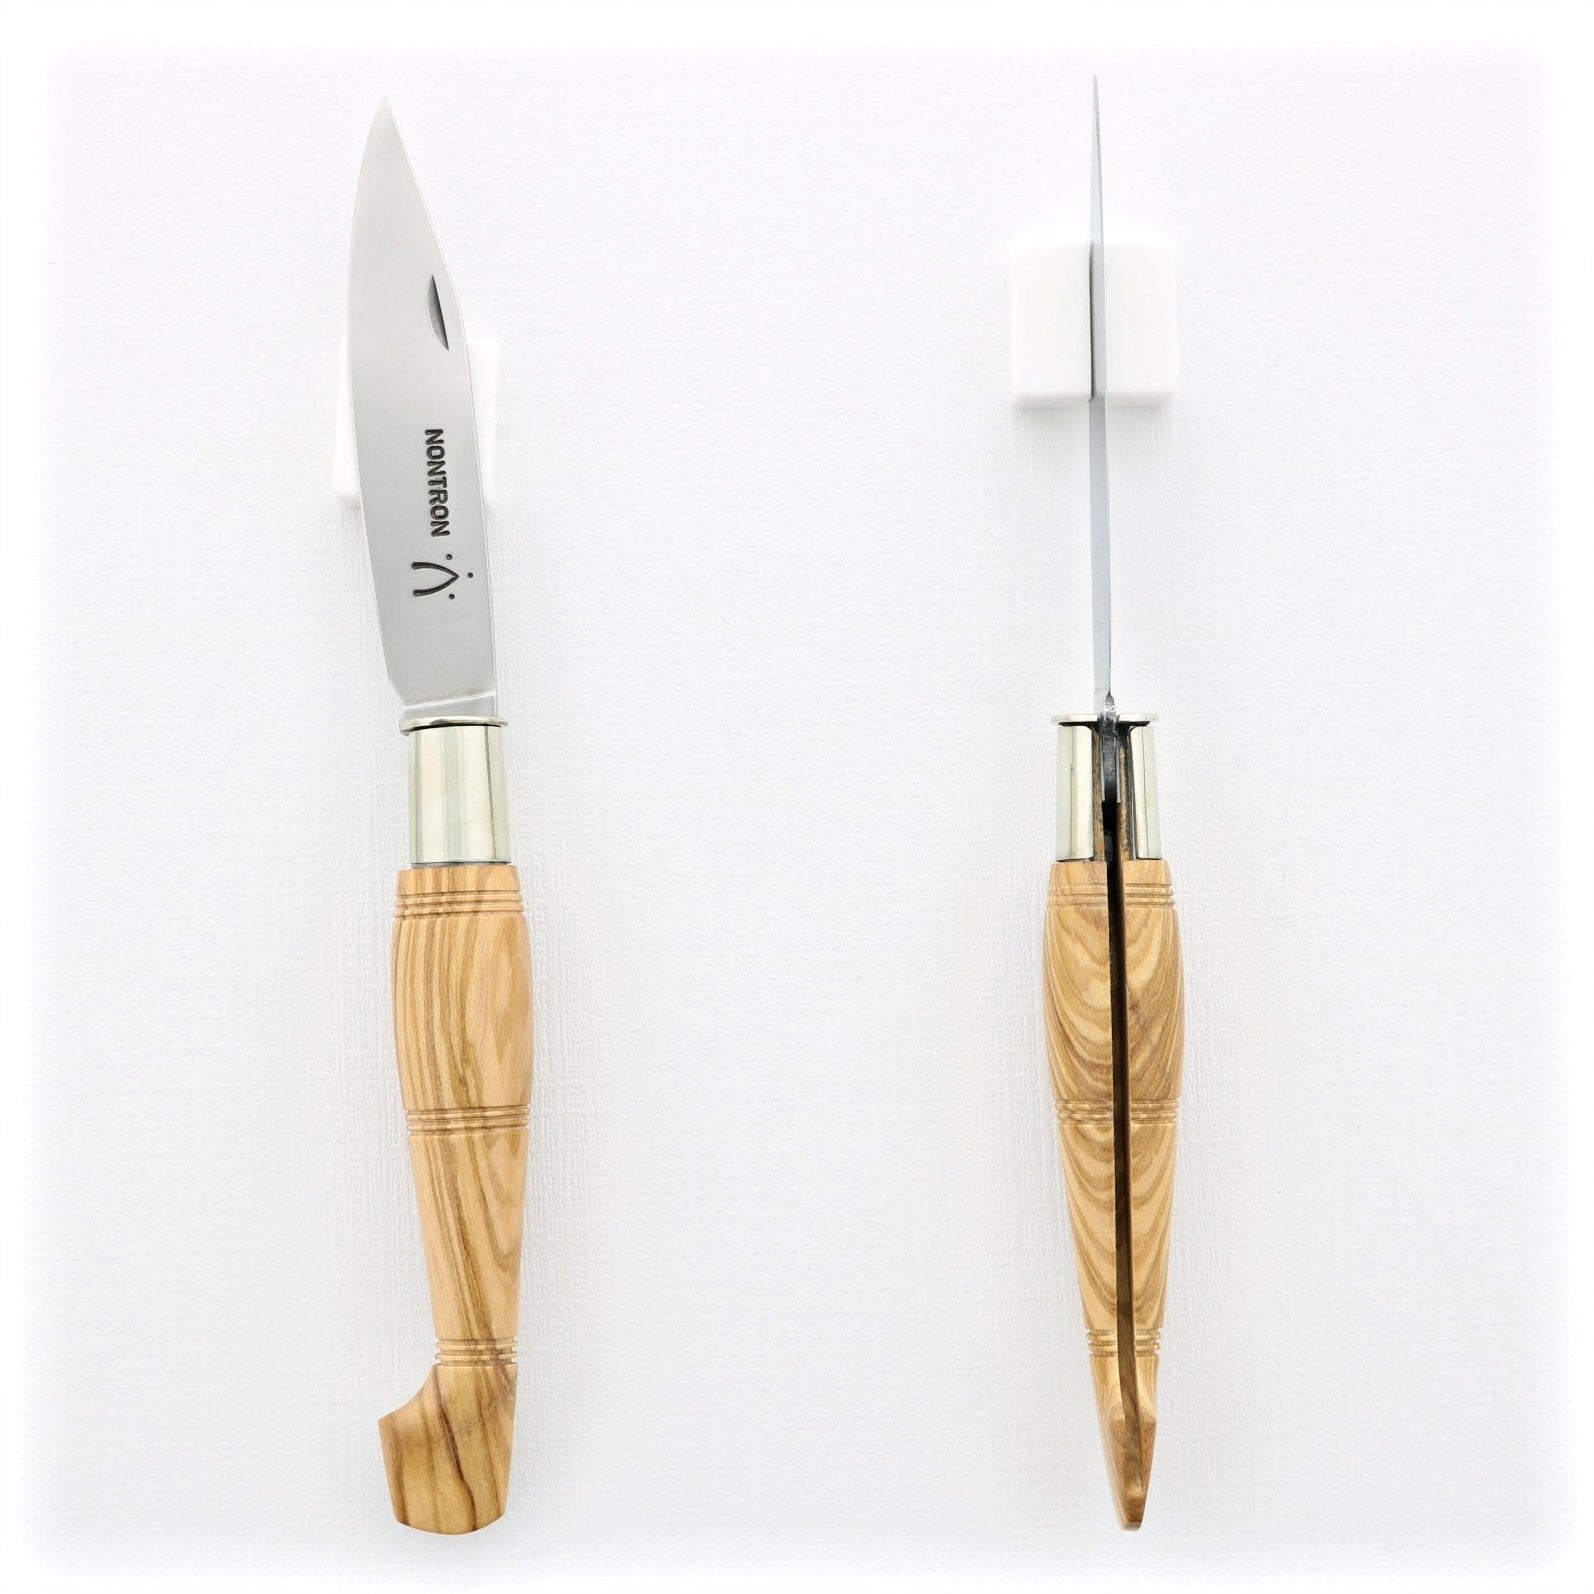 Nontron Pocket Knife No25 - Olivewood Clog Handle